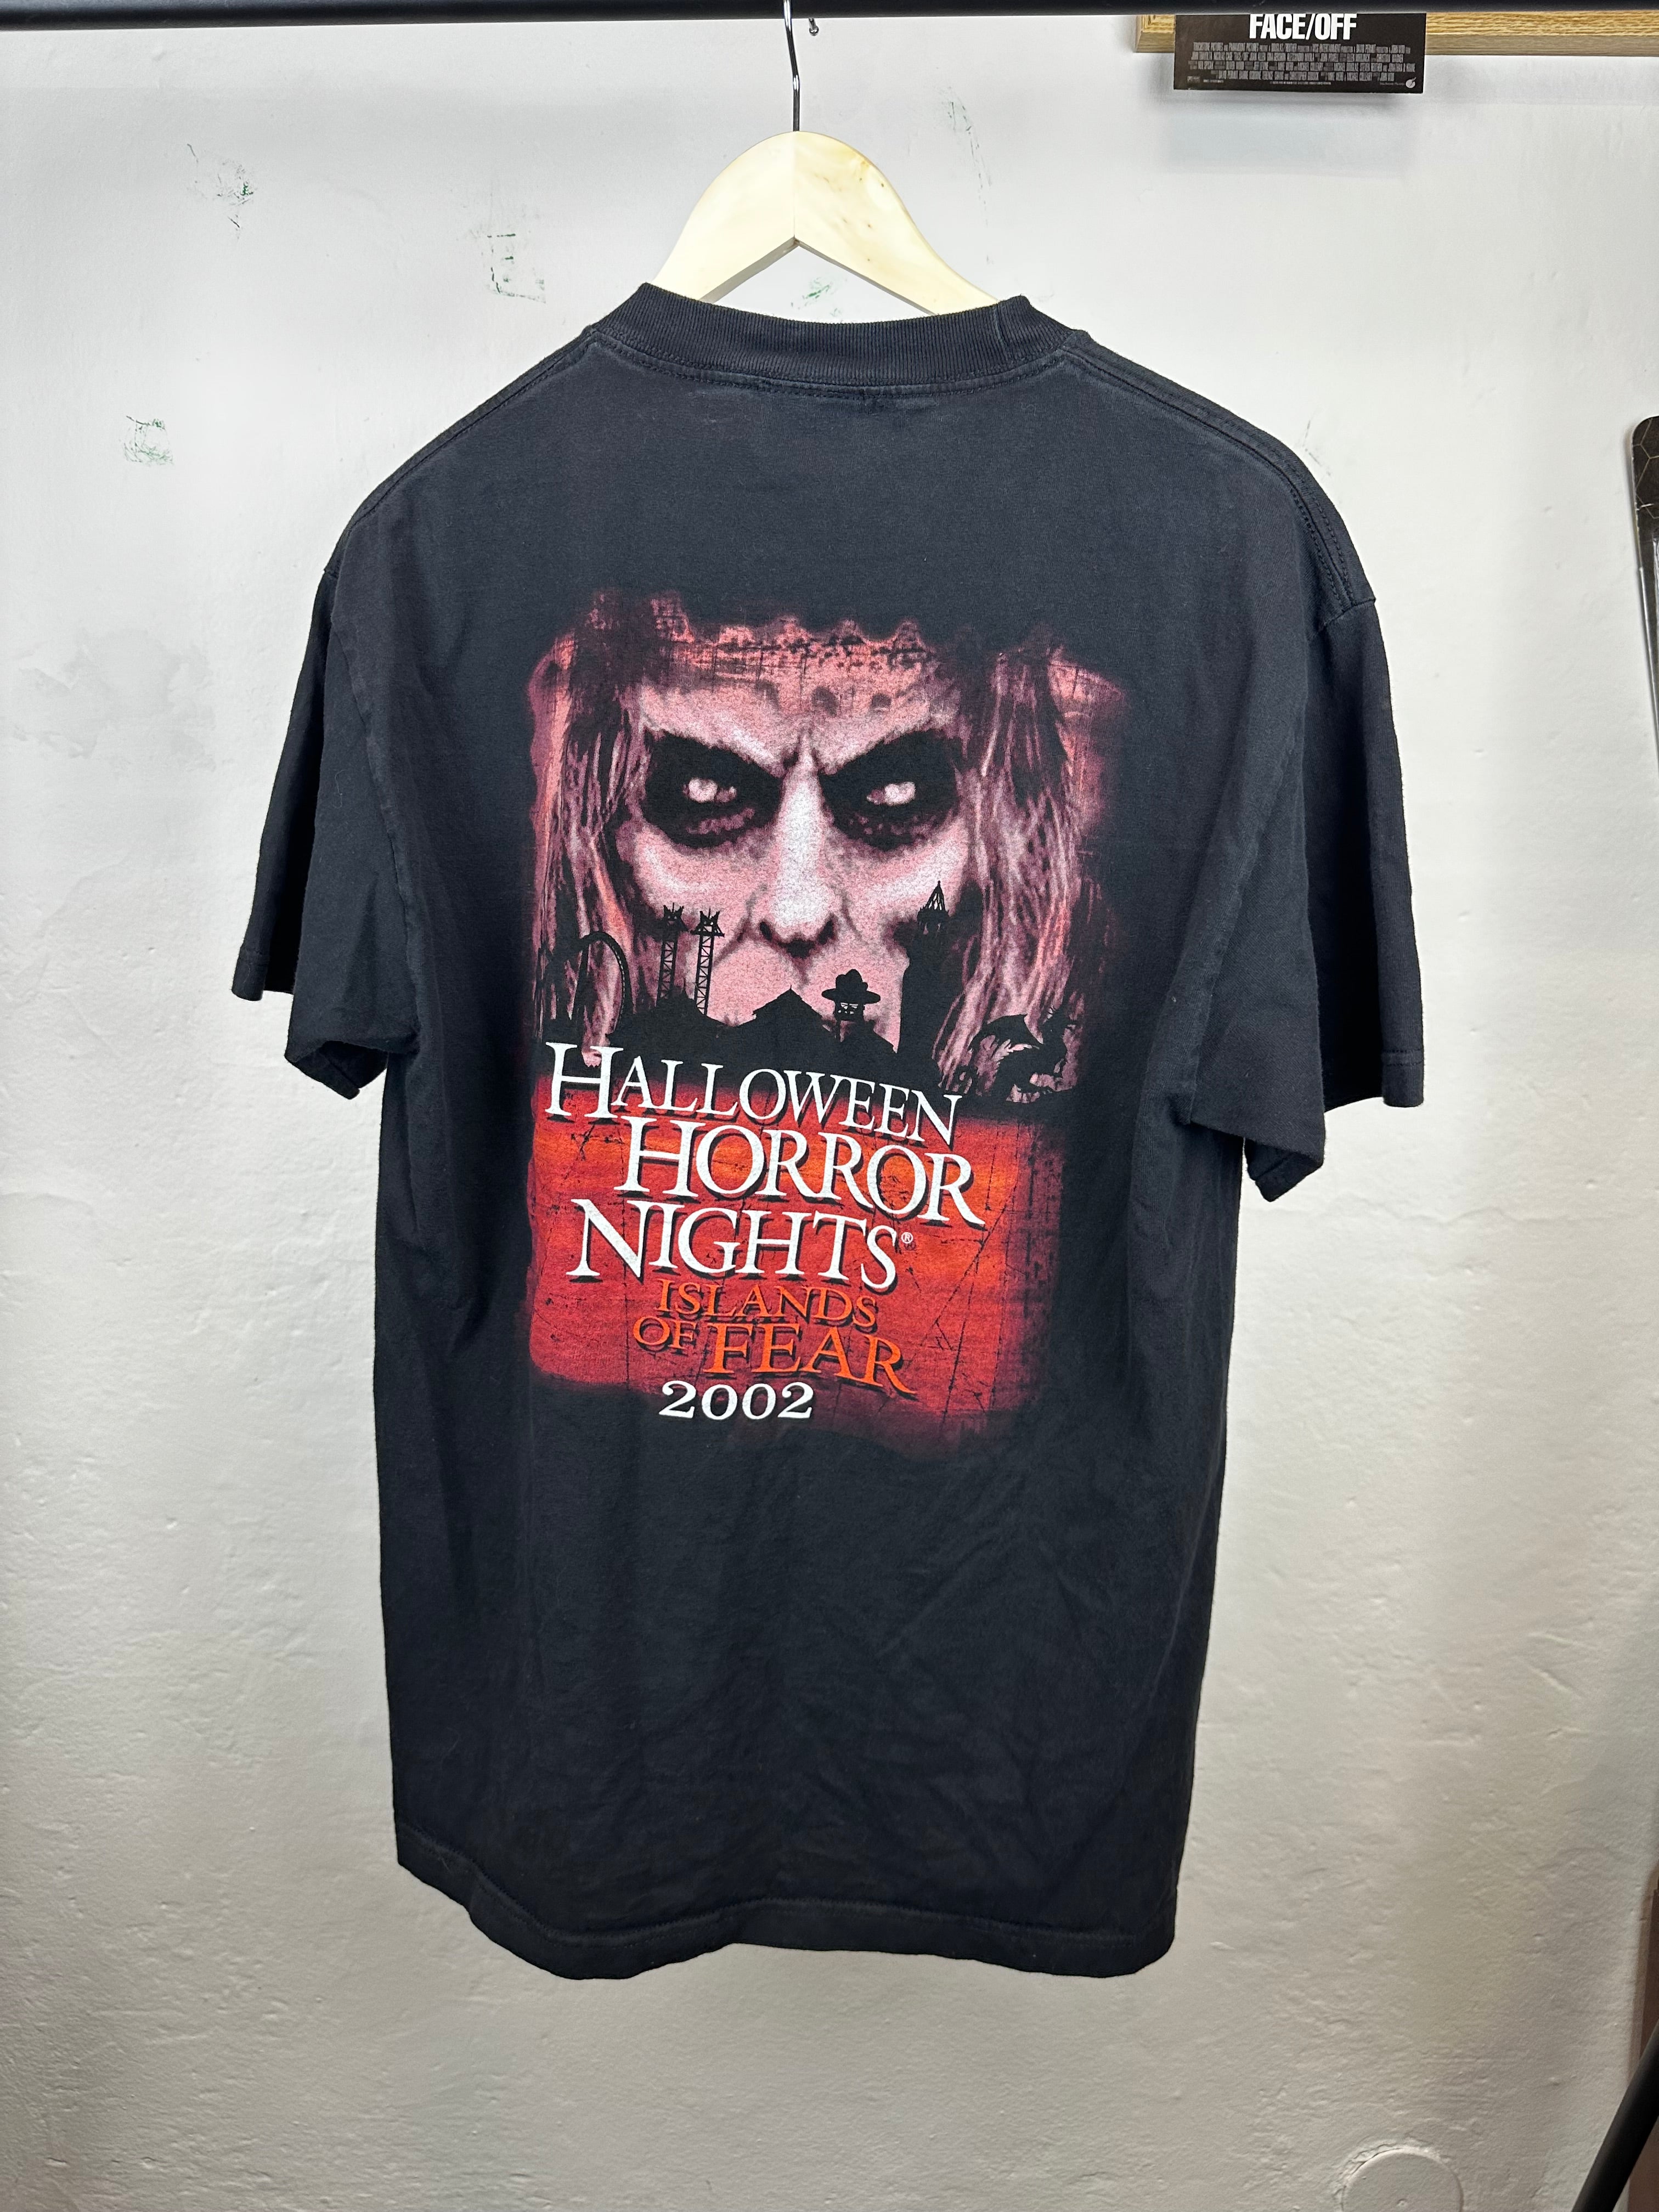 Vintage Halloween Horror Nights “Islands of Fear” t-shirt - size L